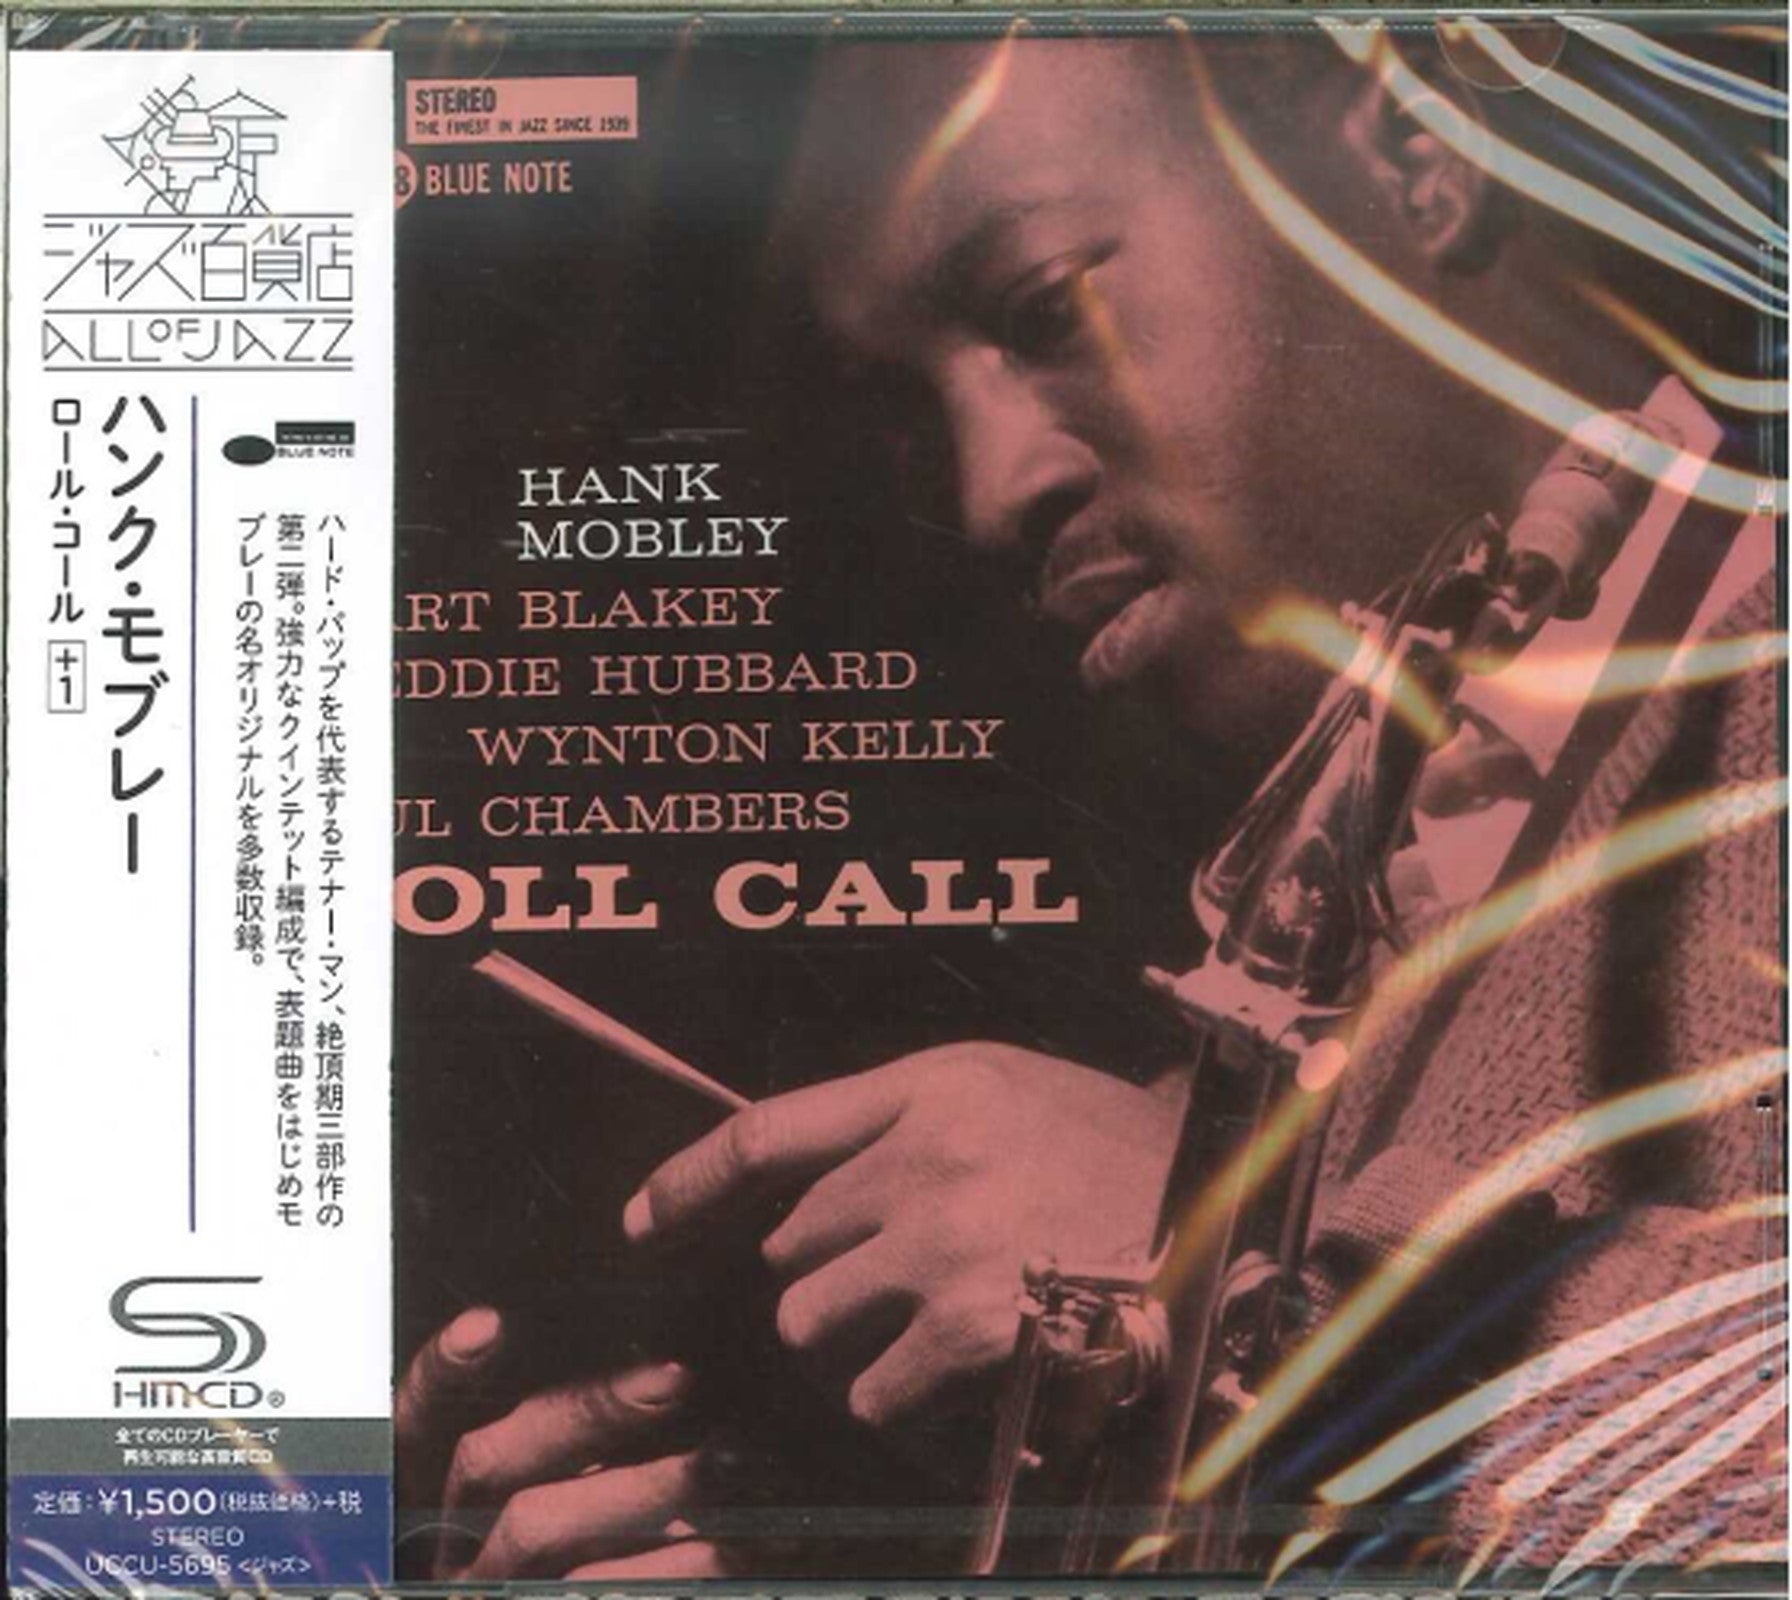 Hank Mobley - Roll Call - Japan SHM-CD - CDs Vinyl Japan Store